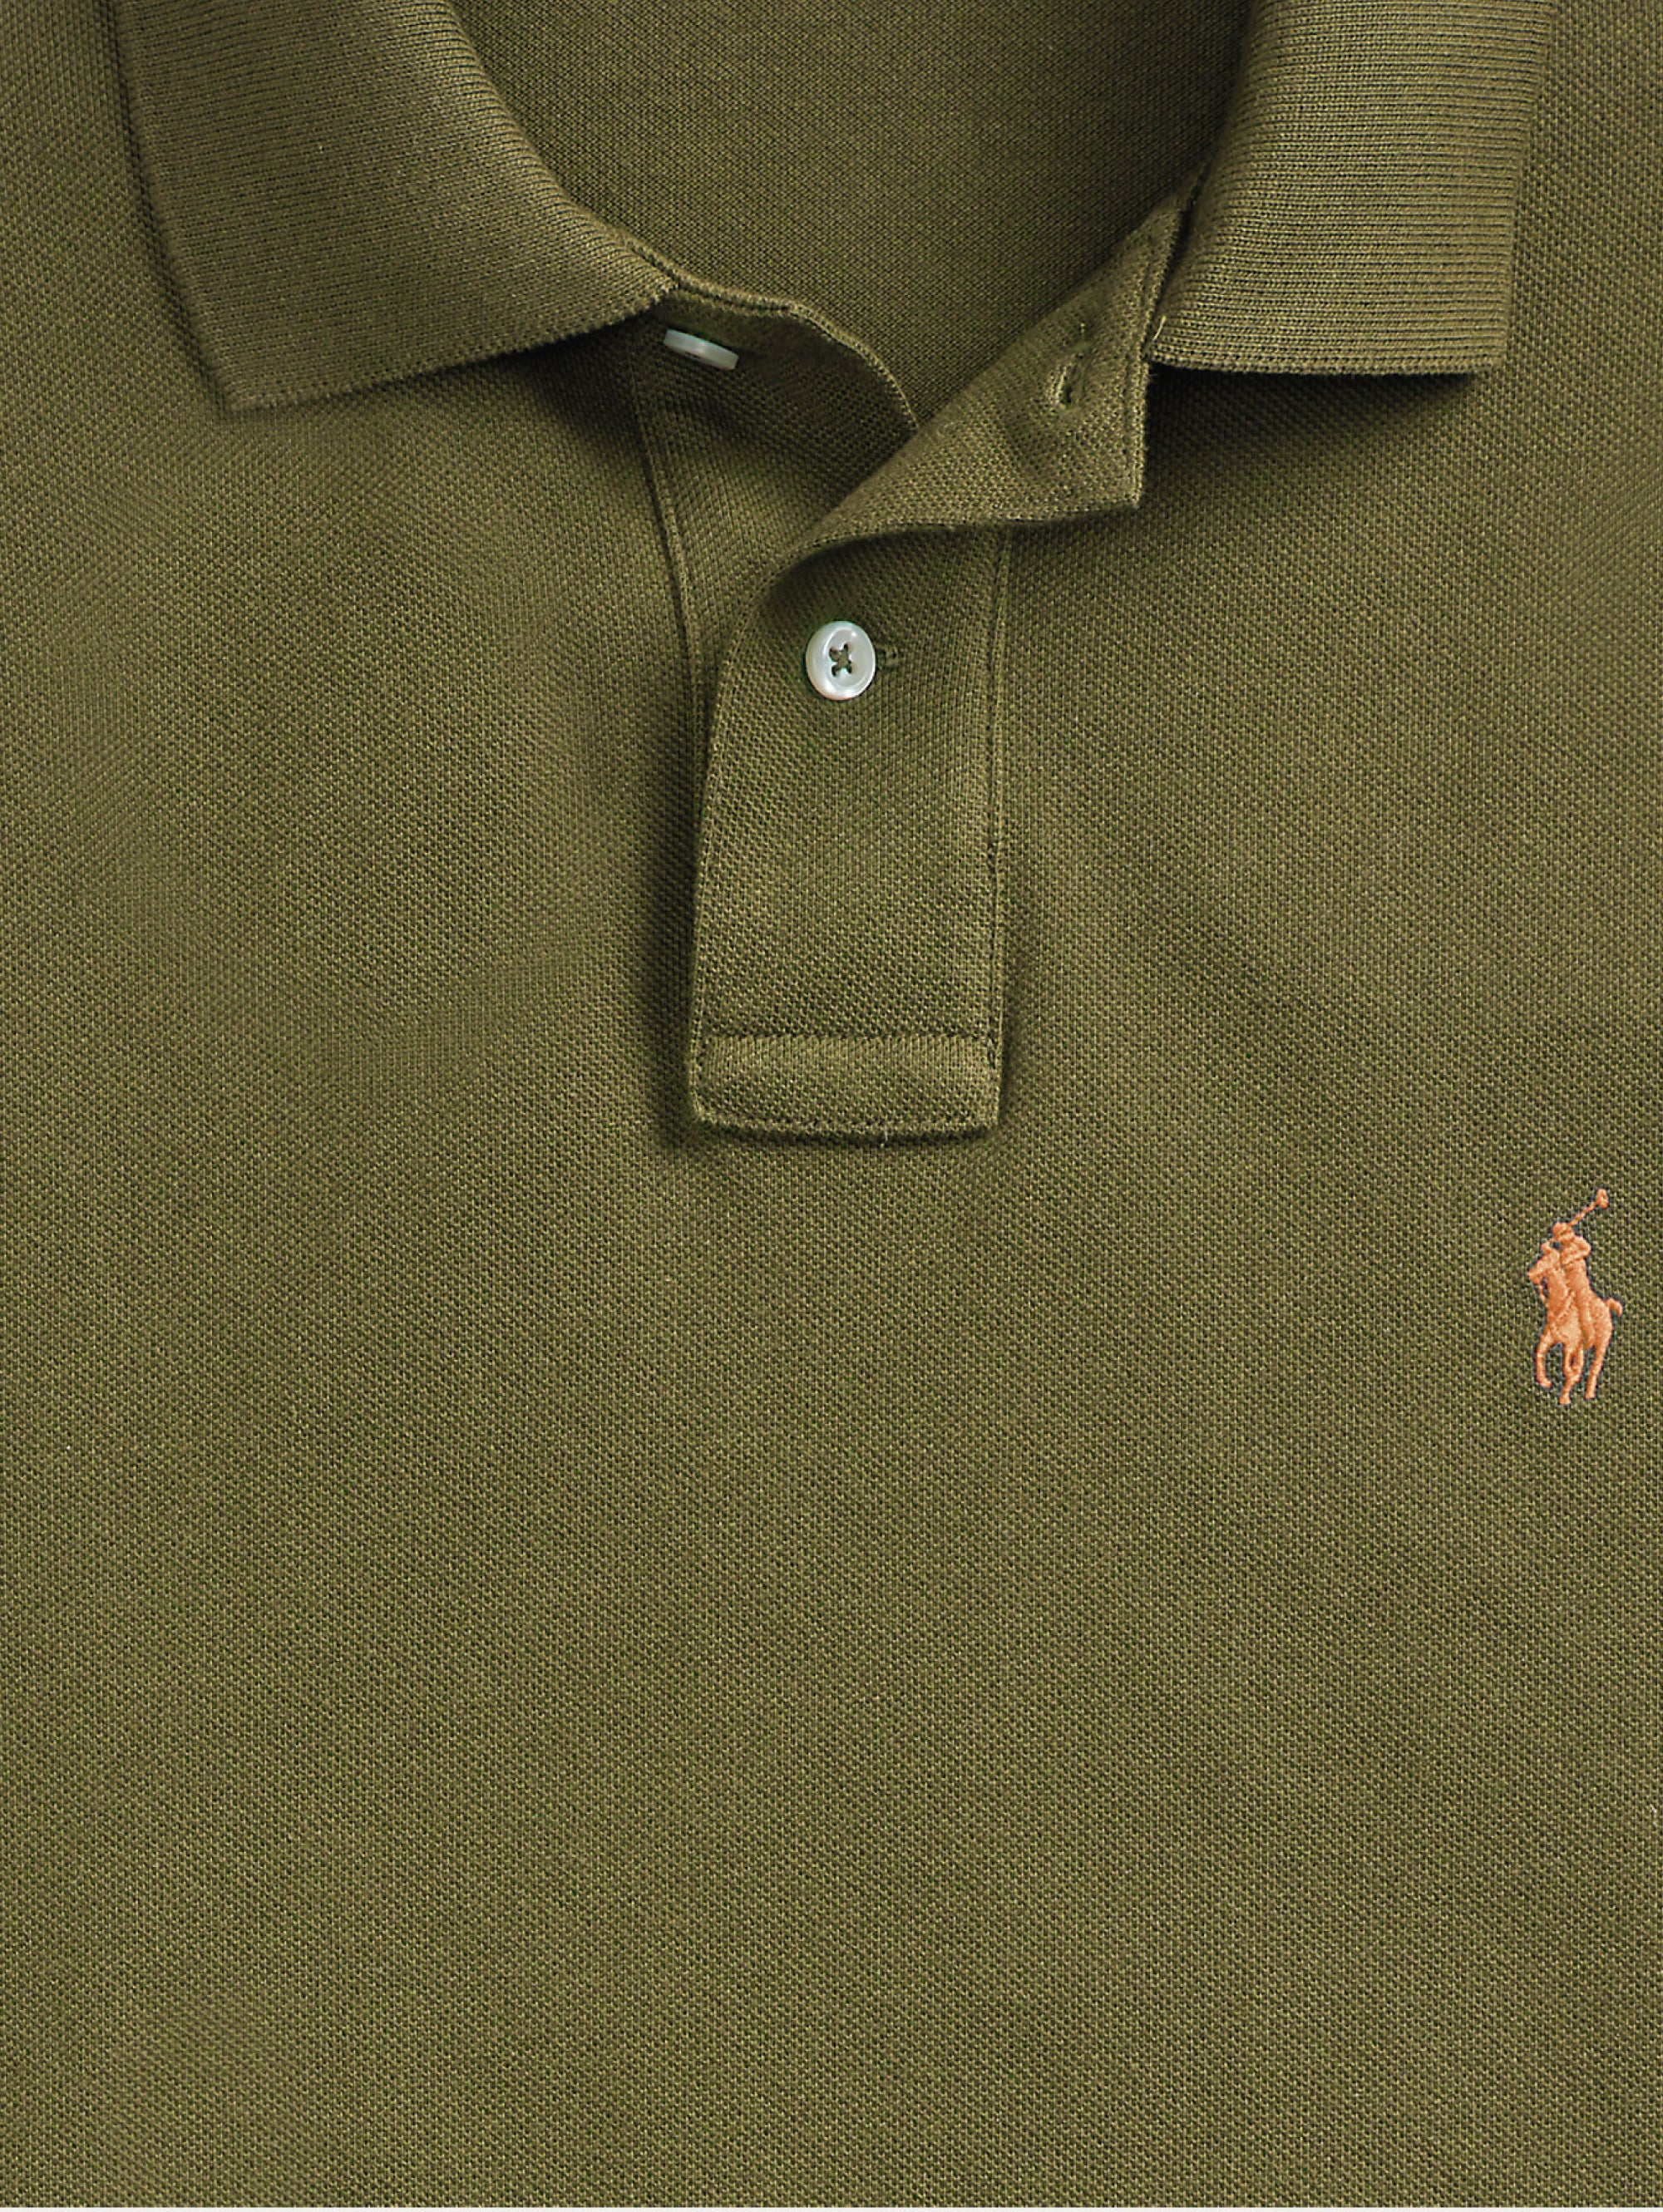 Army Green Slim Fit Pique Polo Shirt